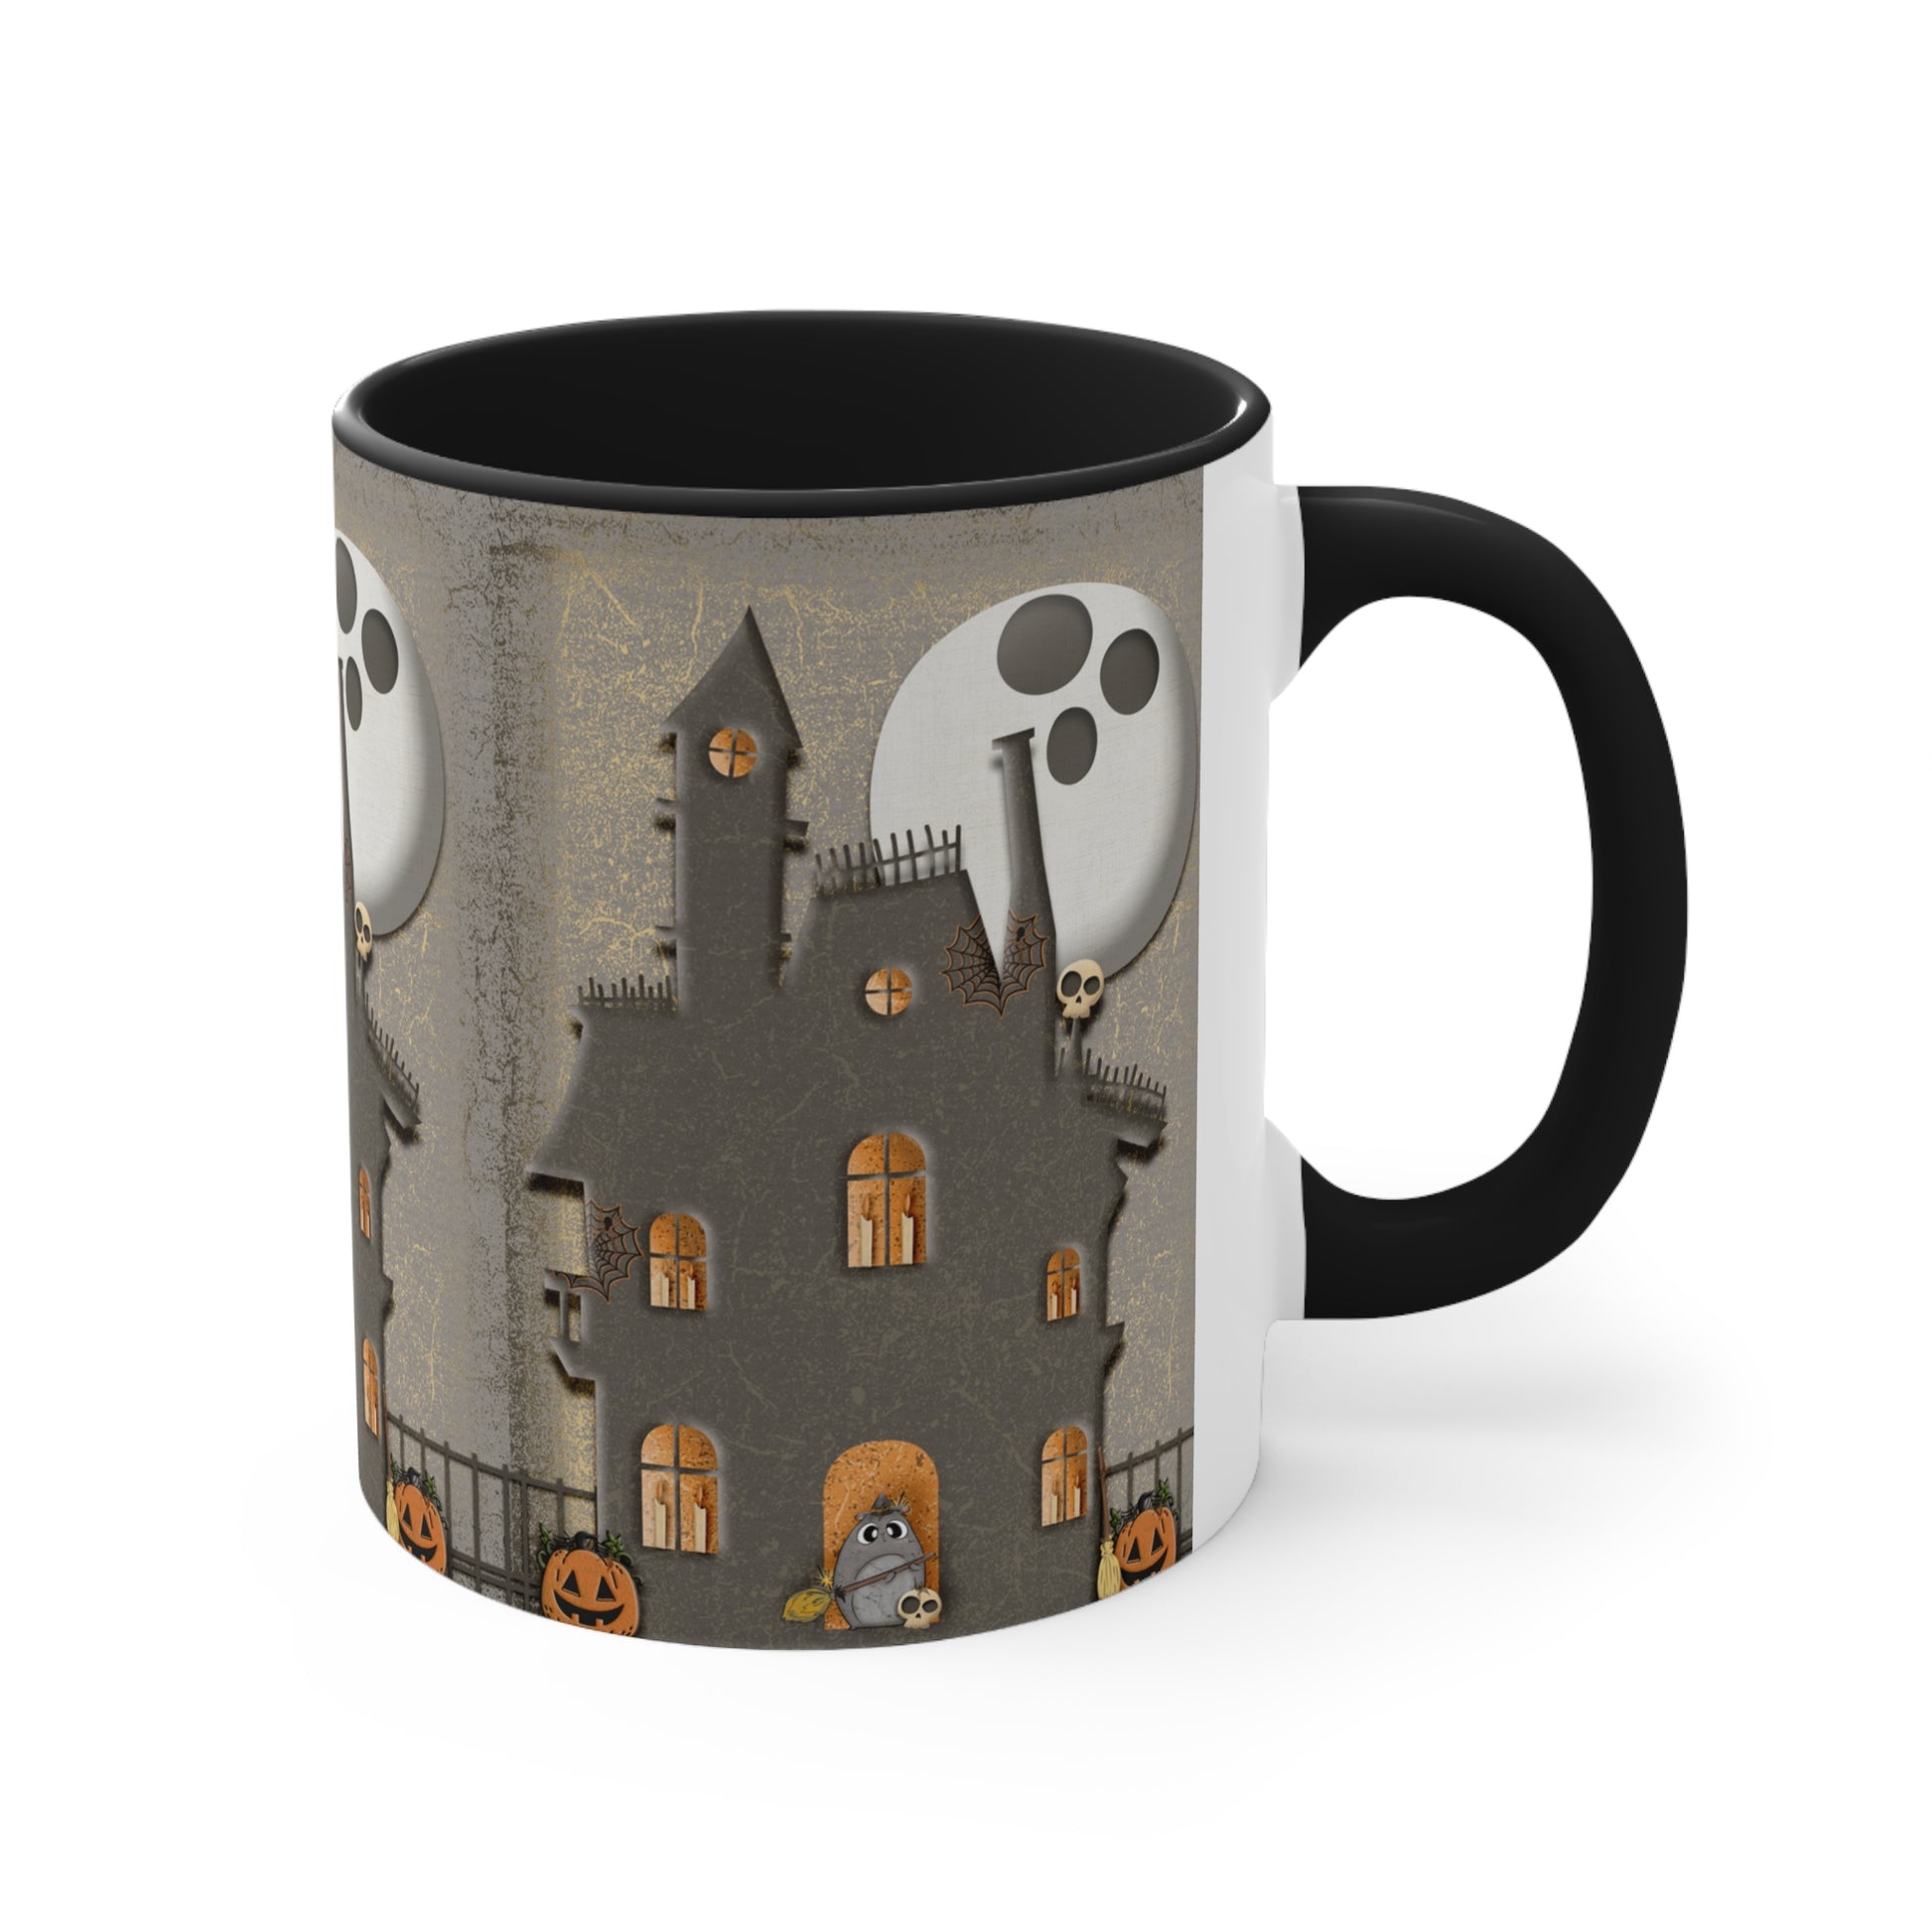 Two Tone Accent Coffee Mug, 11oz - Haunted House black handle